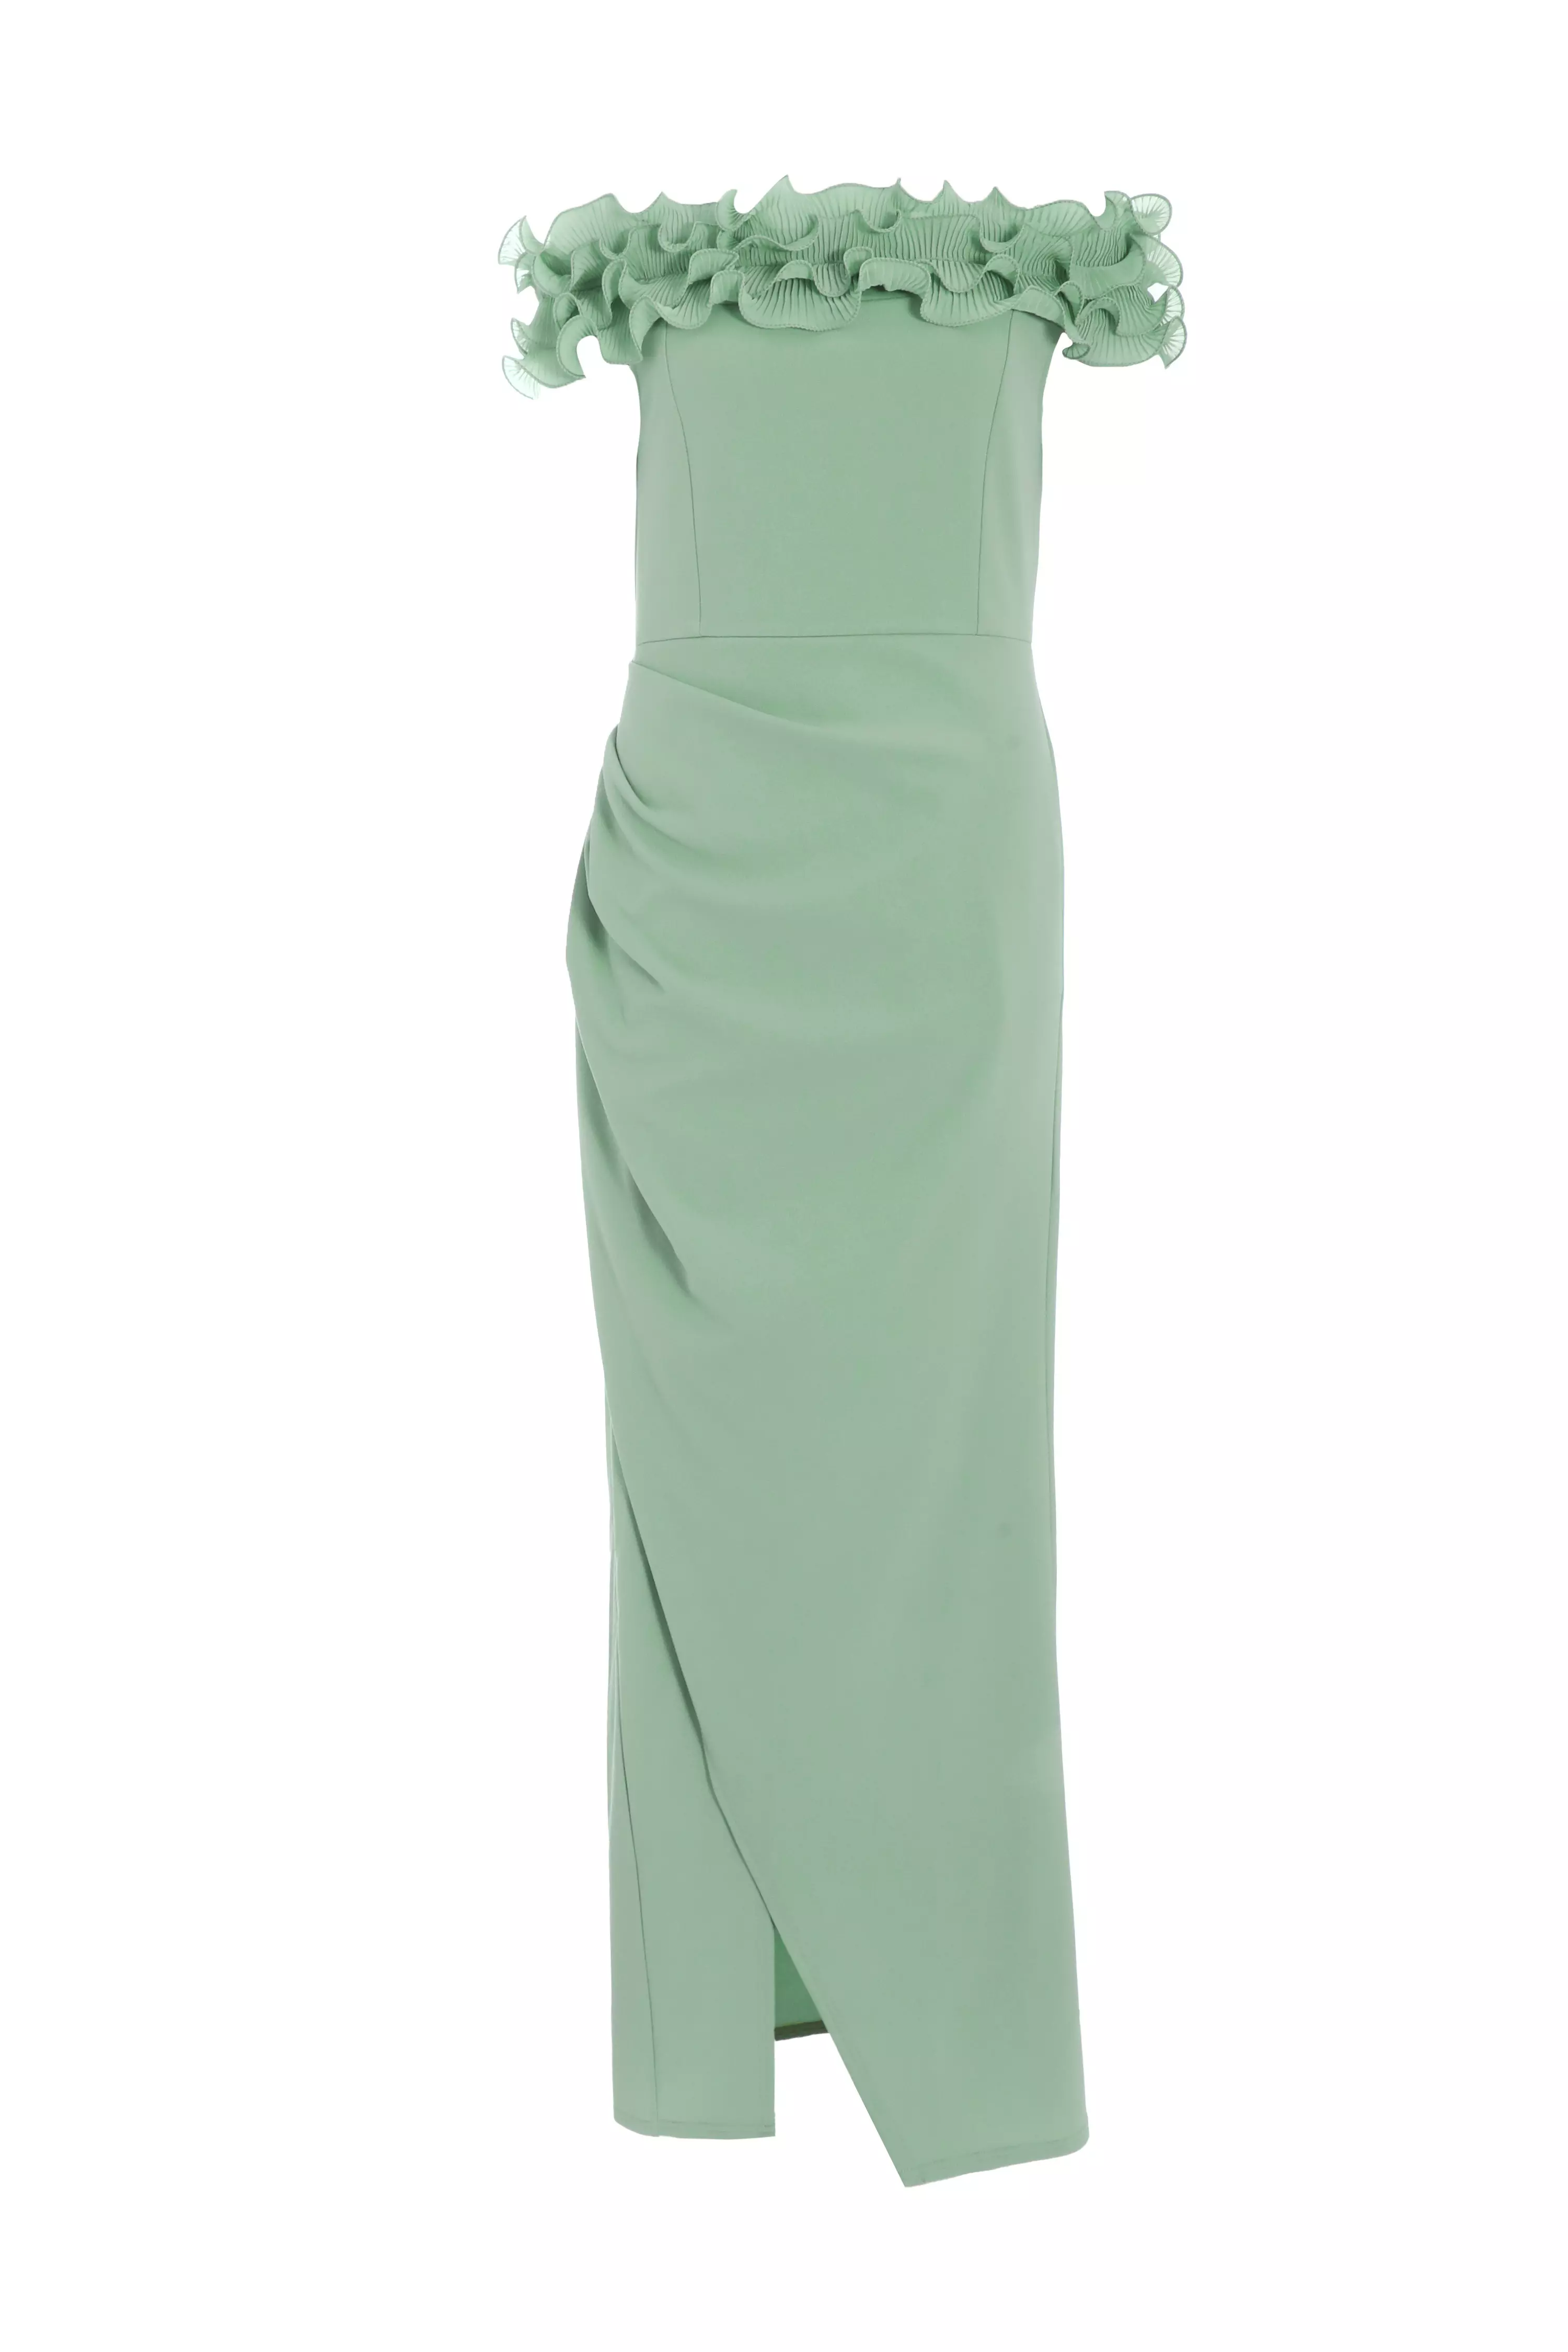 Sage Green Ruffle Bardot Maxi Dress